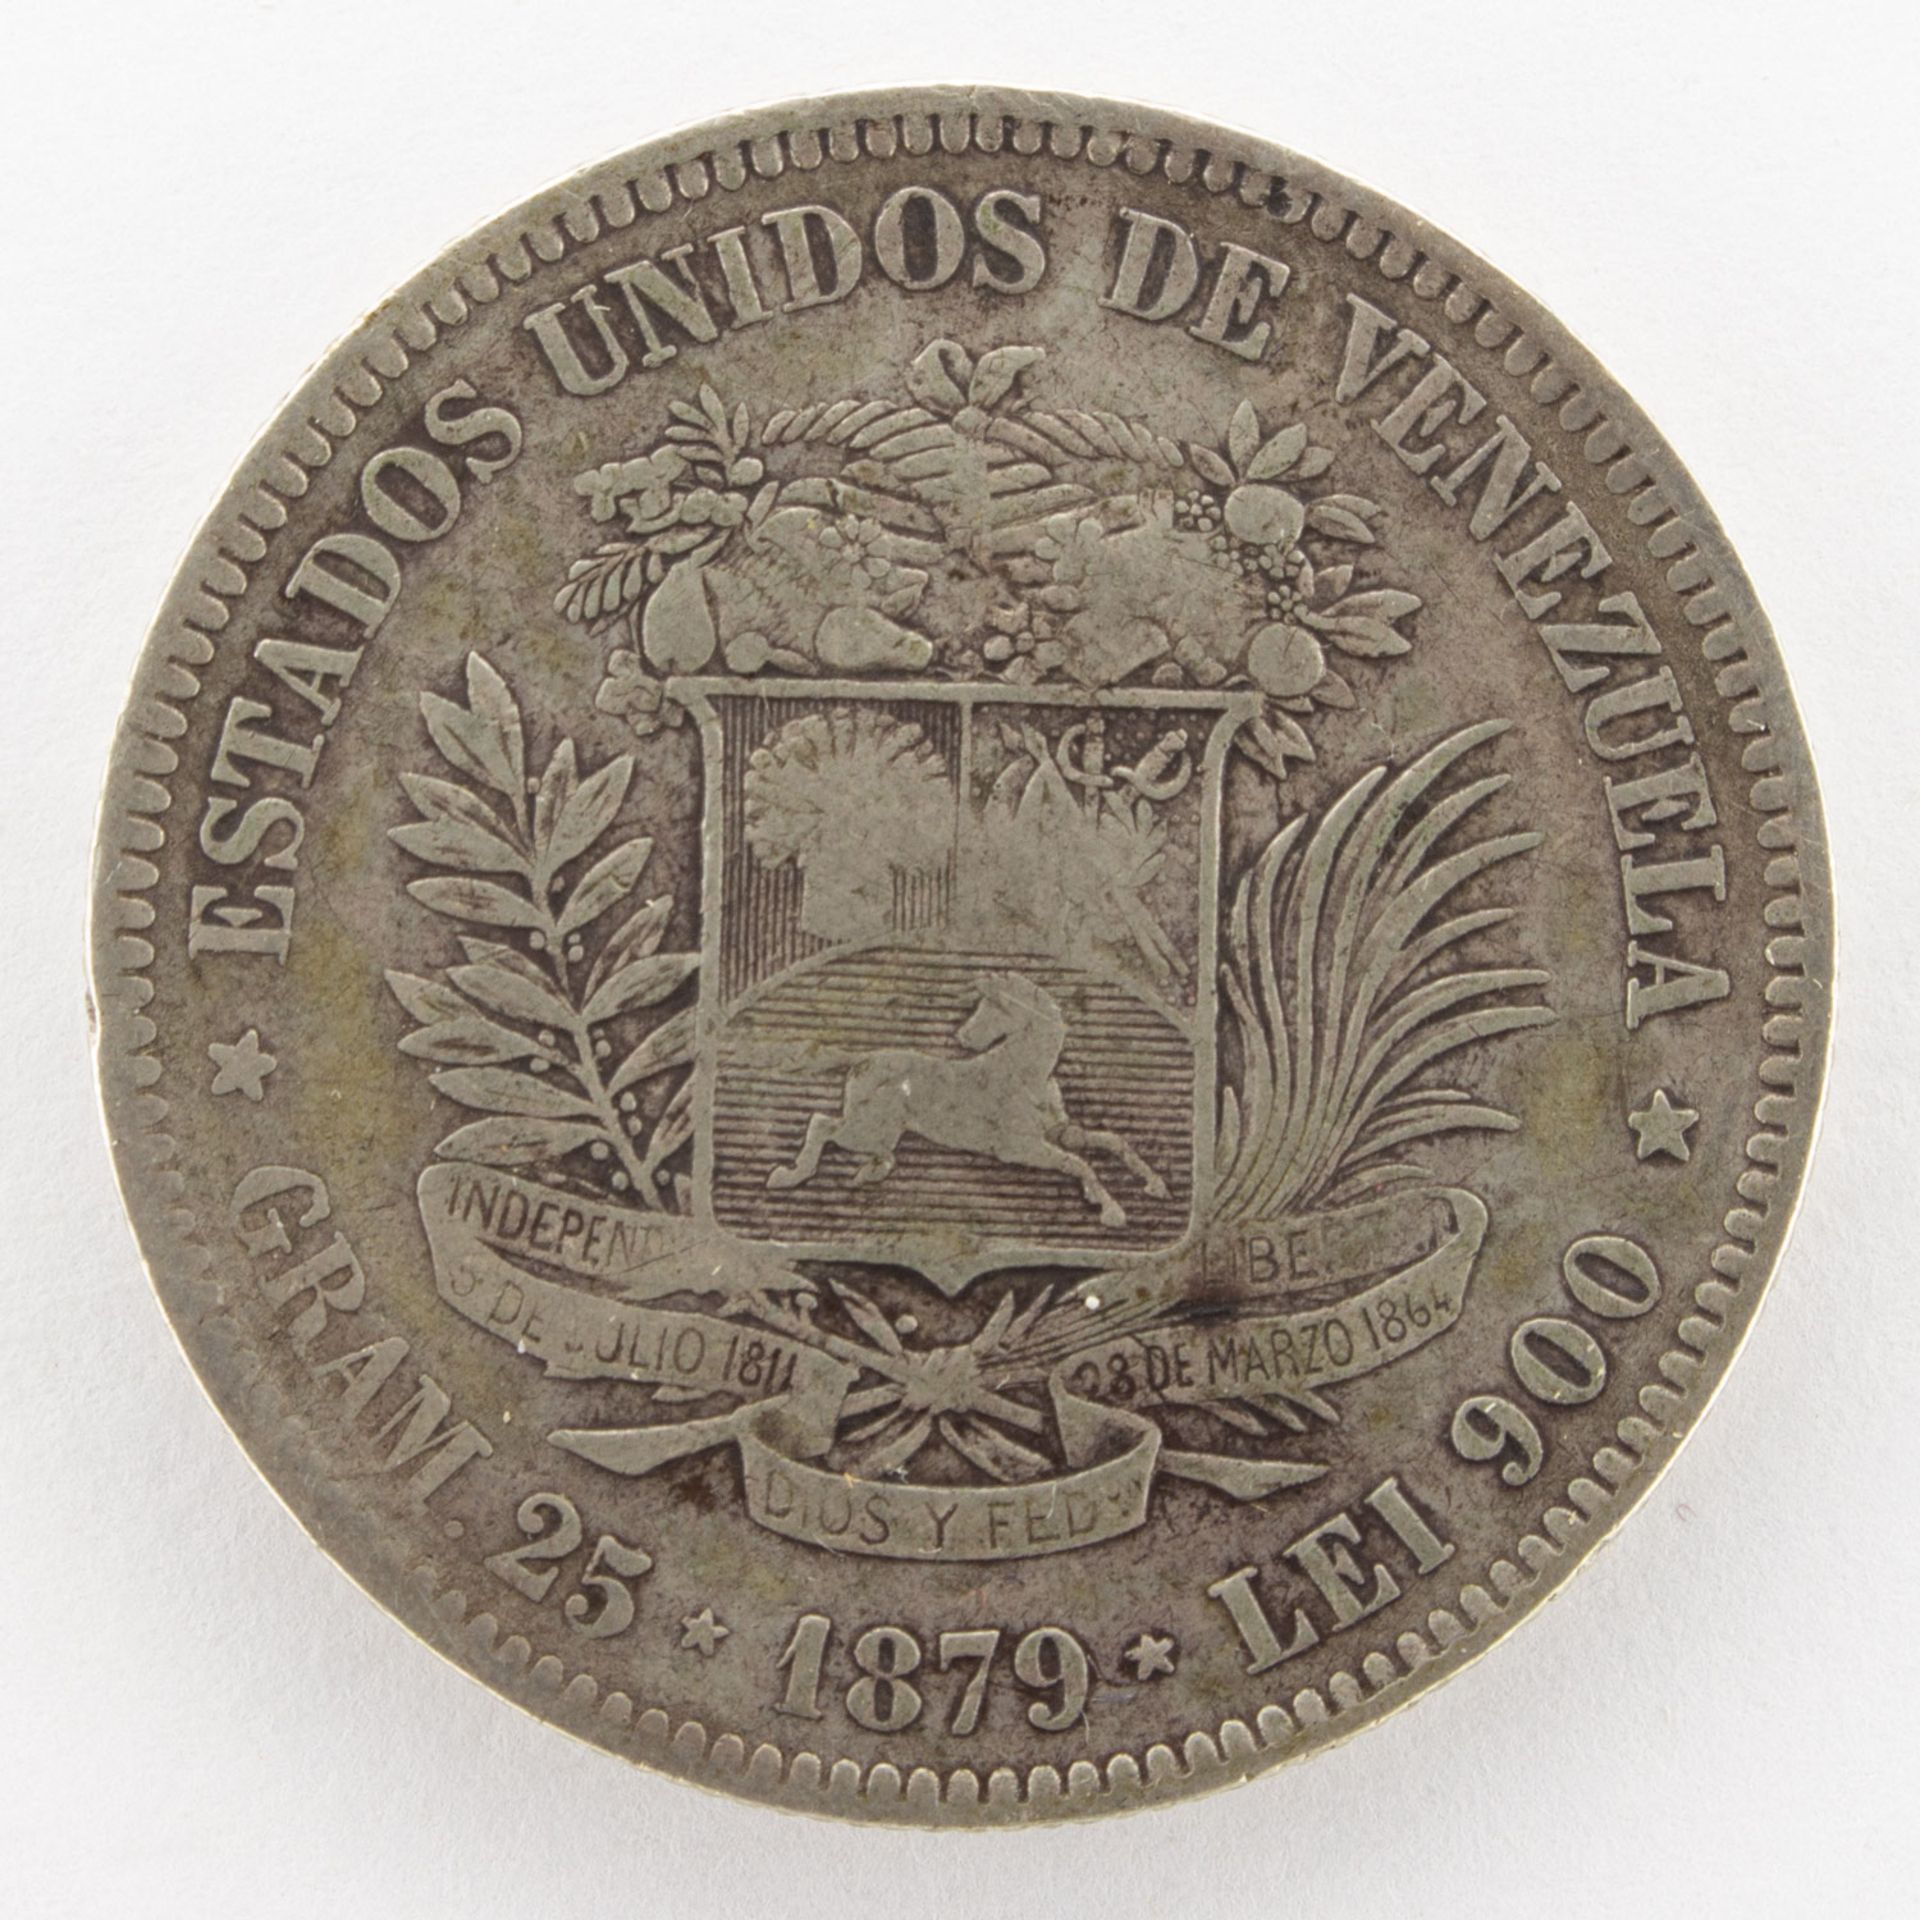 5 Bolivar - Image 2 of 2